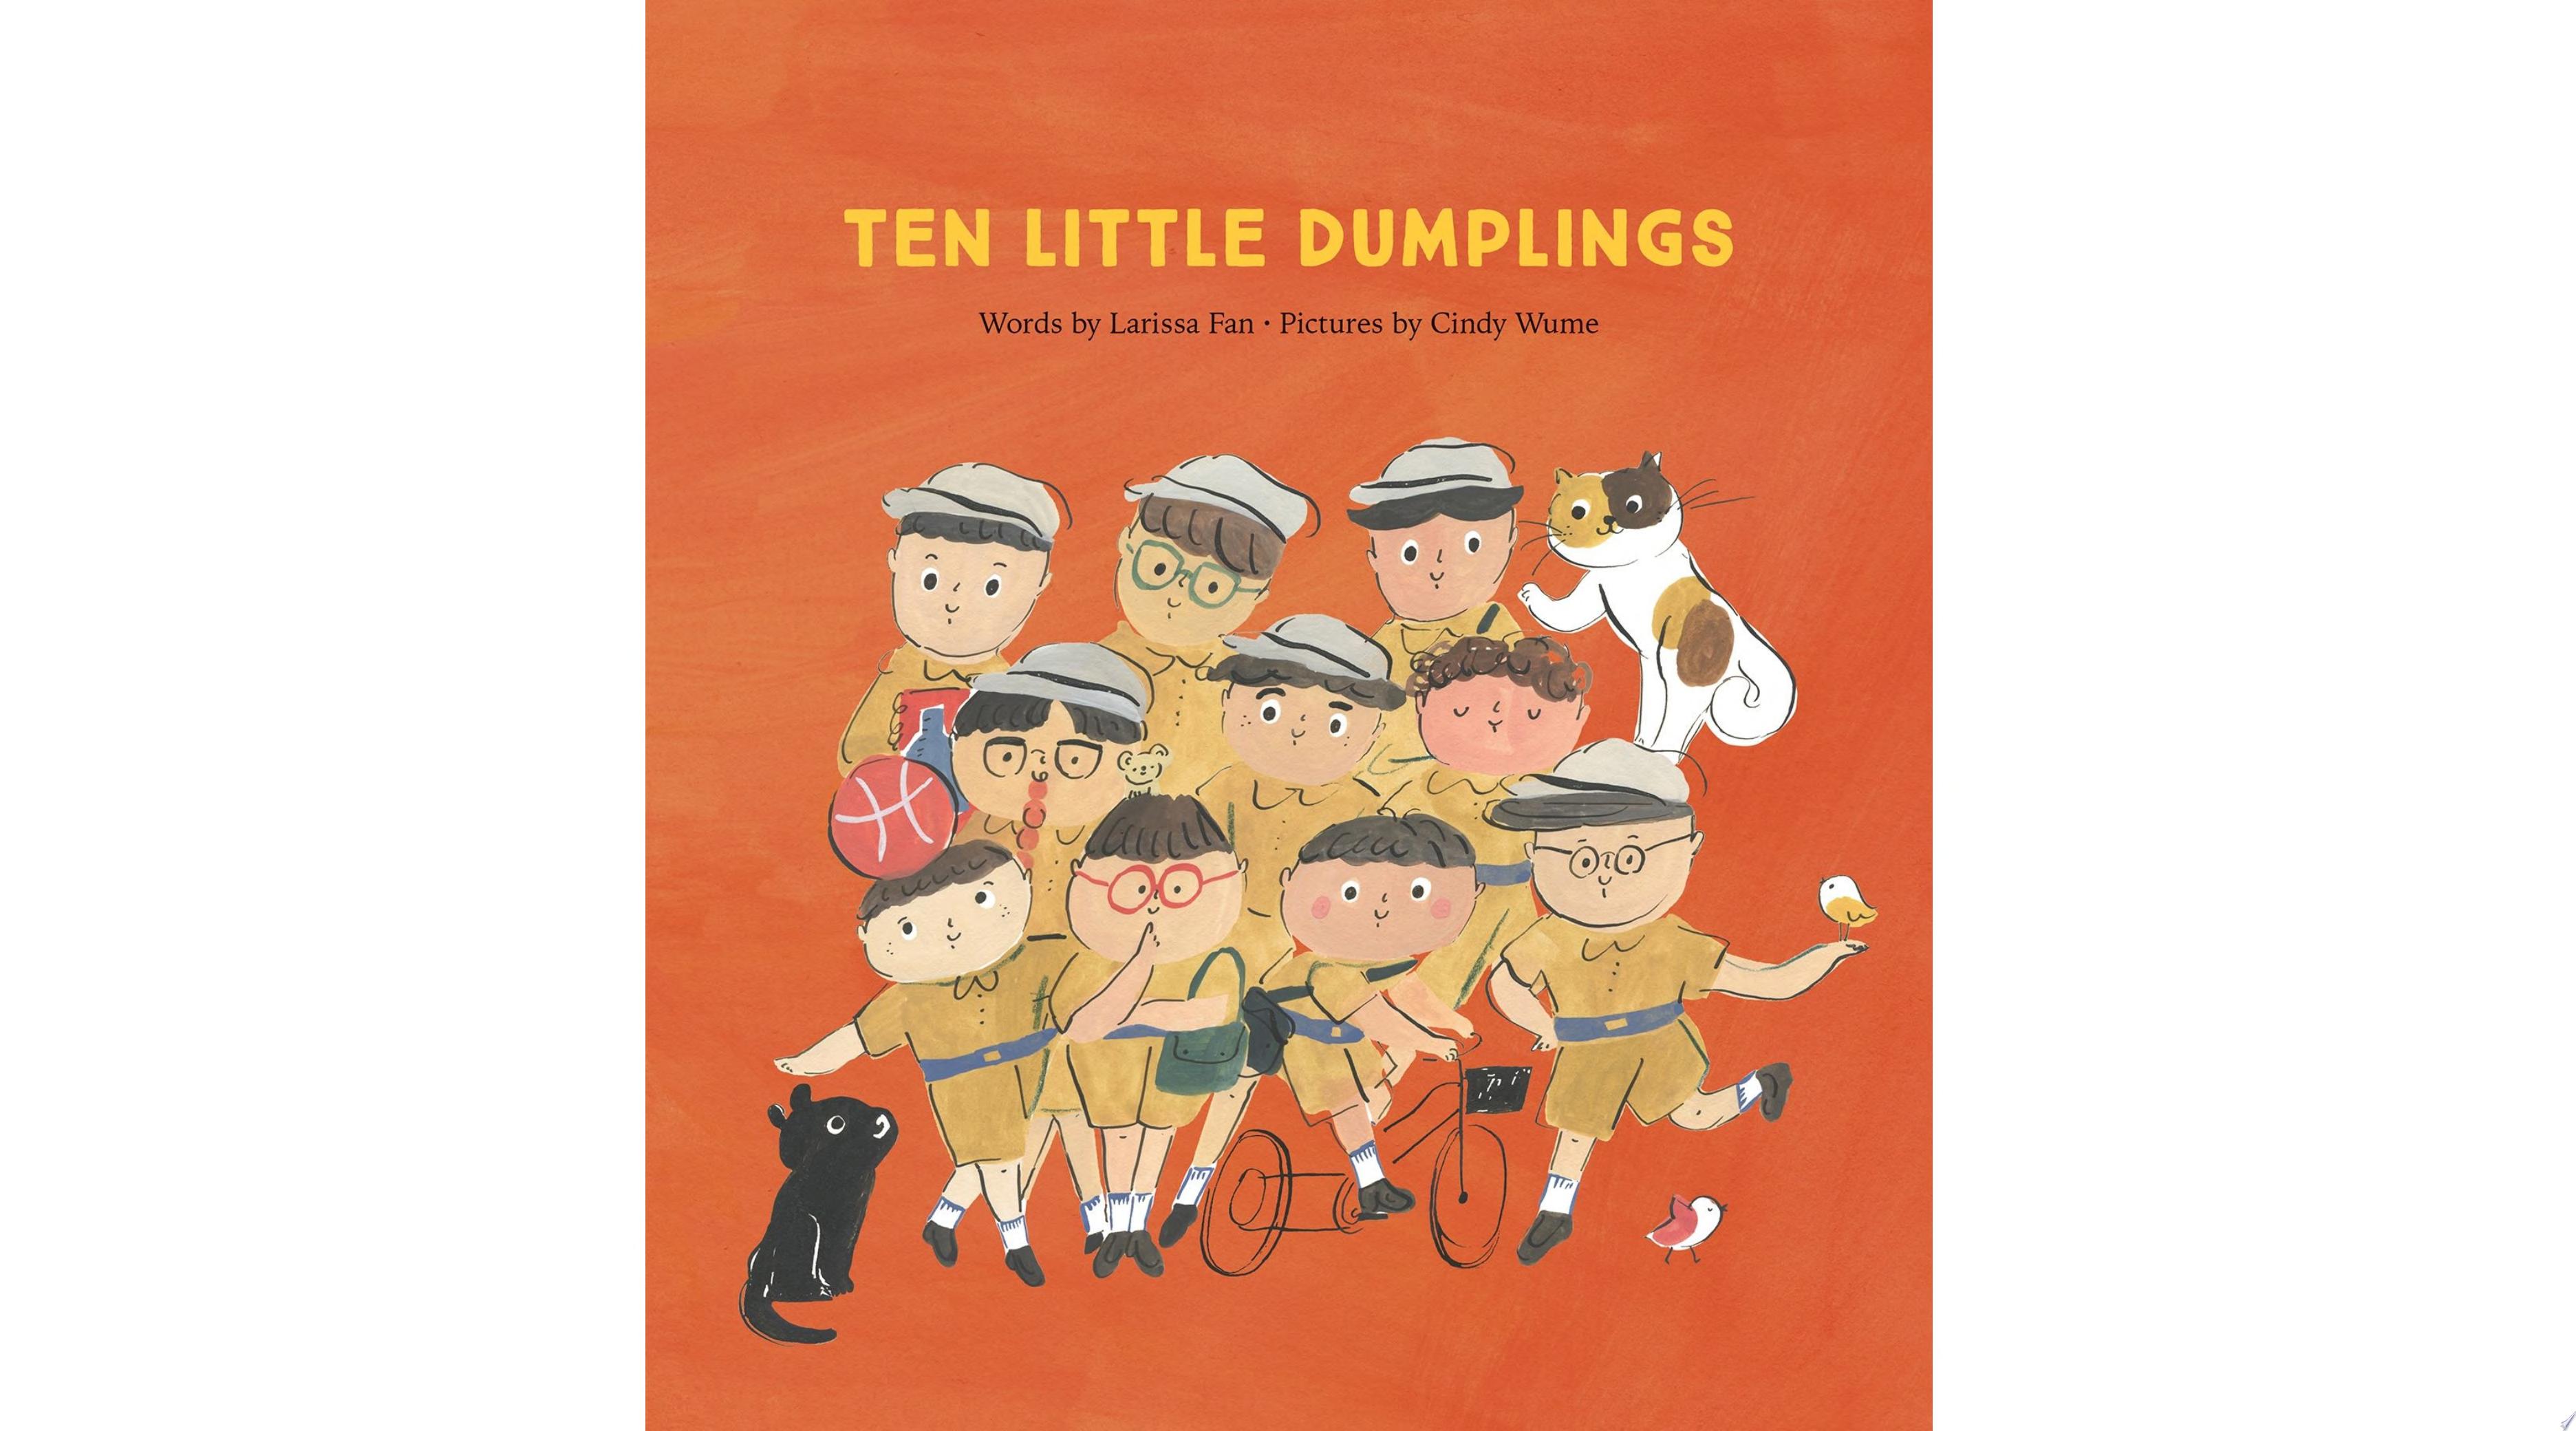 Image for "Ten Little Dumplings"